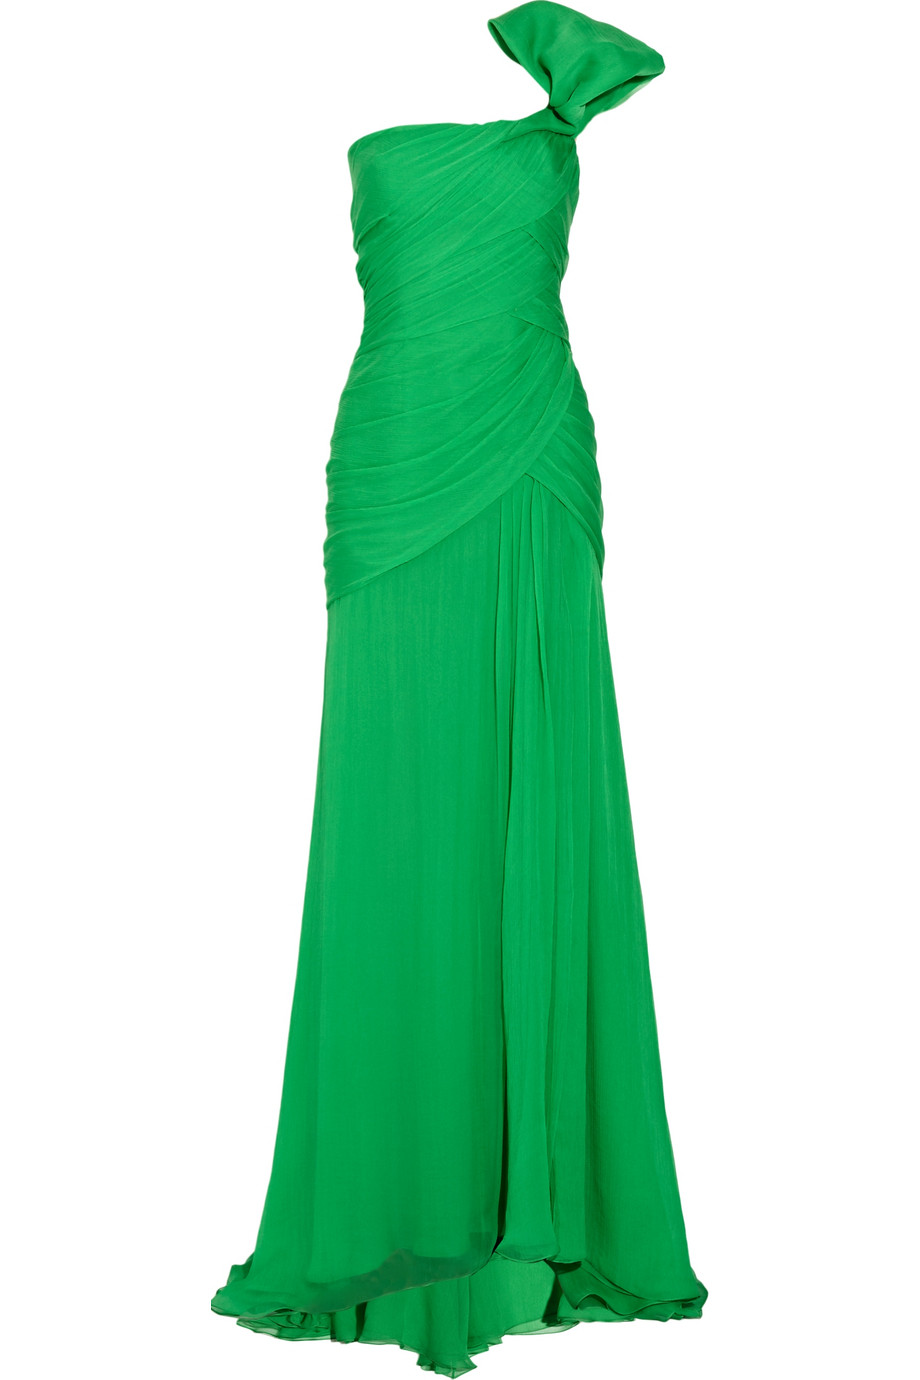 Lyst - Oscar De La Renta One-shoulder Silk-chiffon Gown in Green